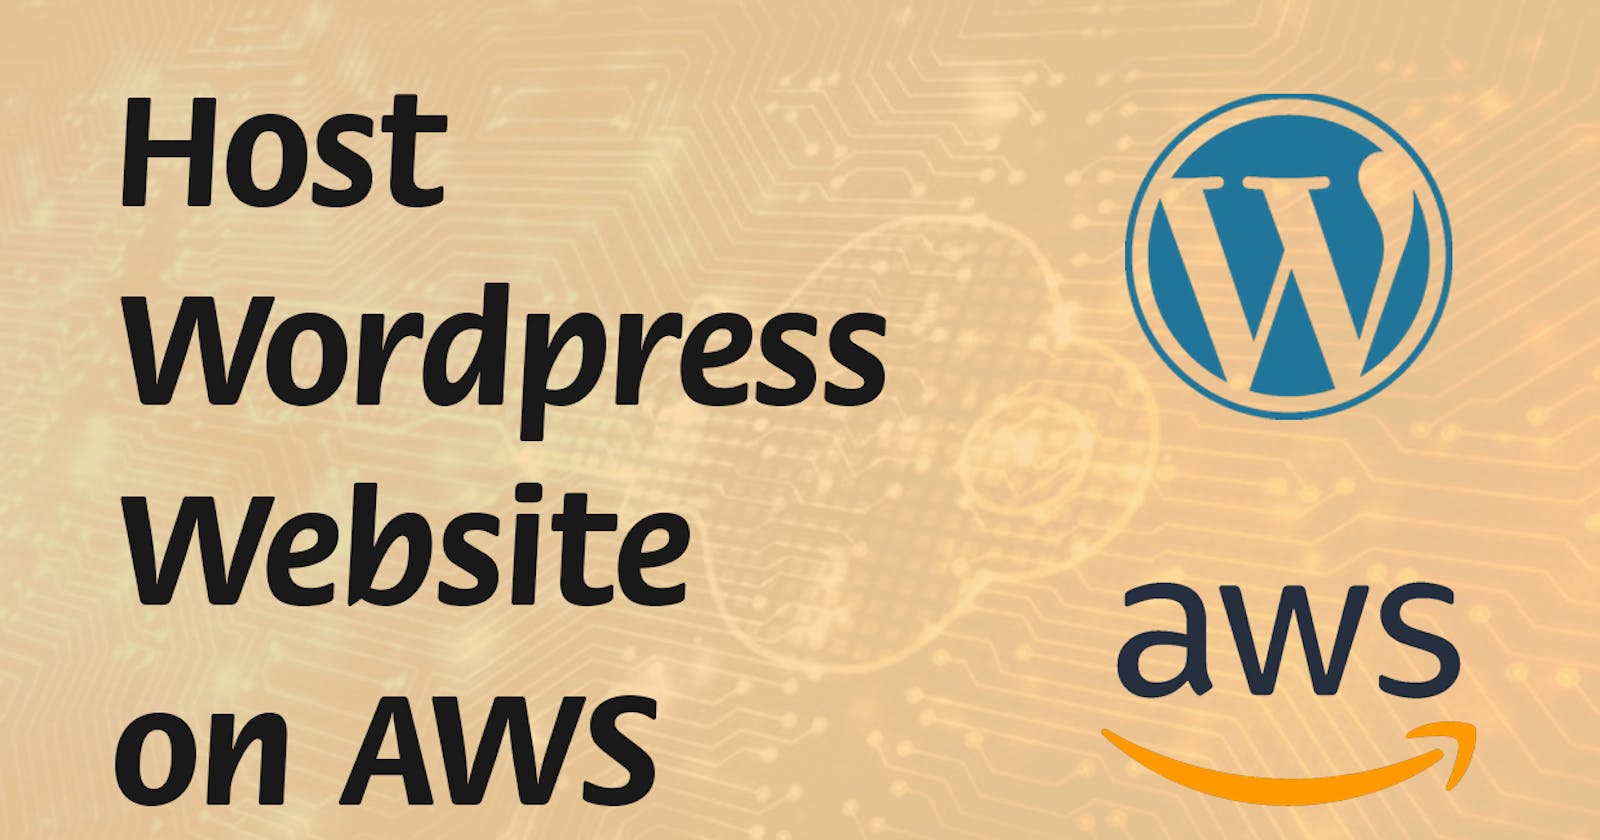 Day 45: Deploy WordPress website on AWS